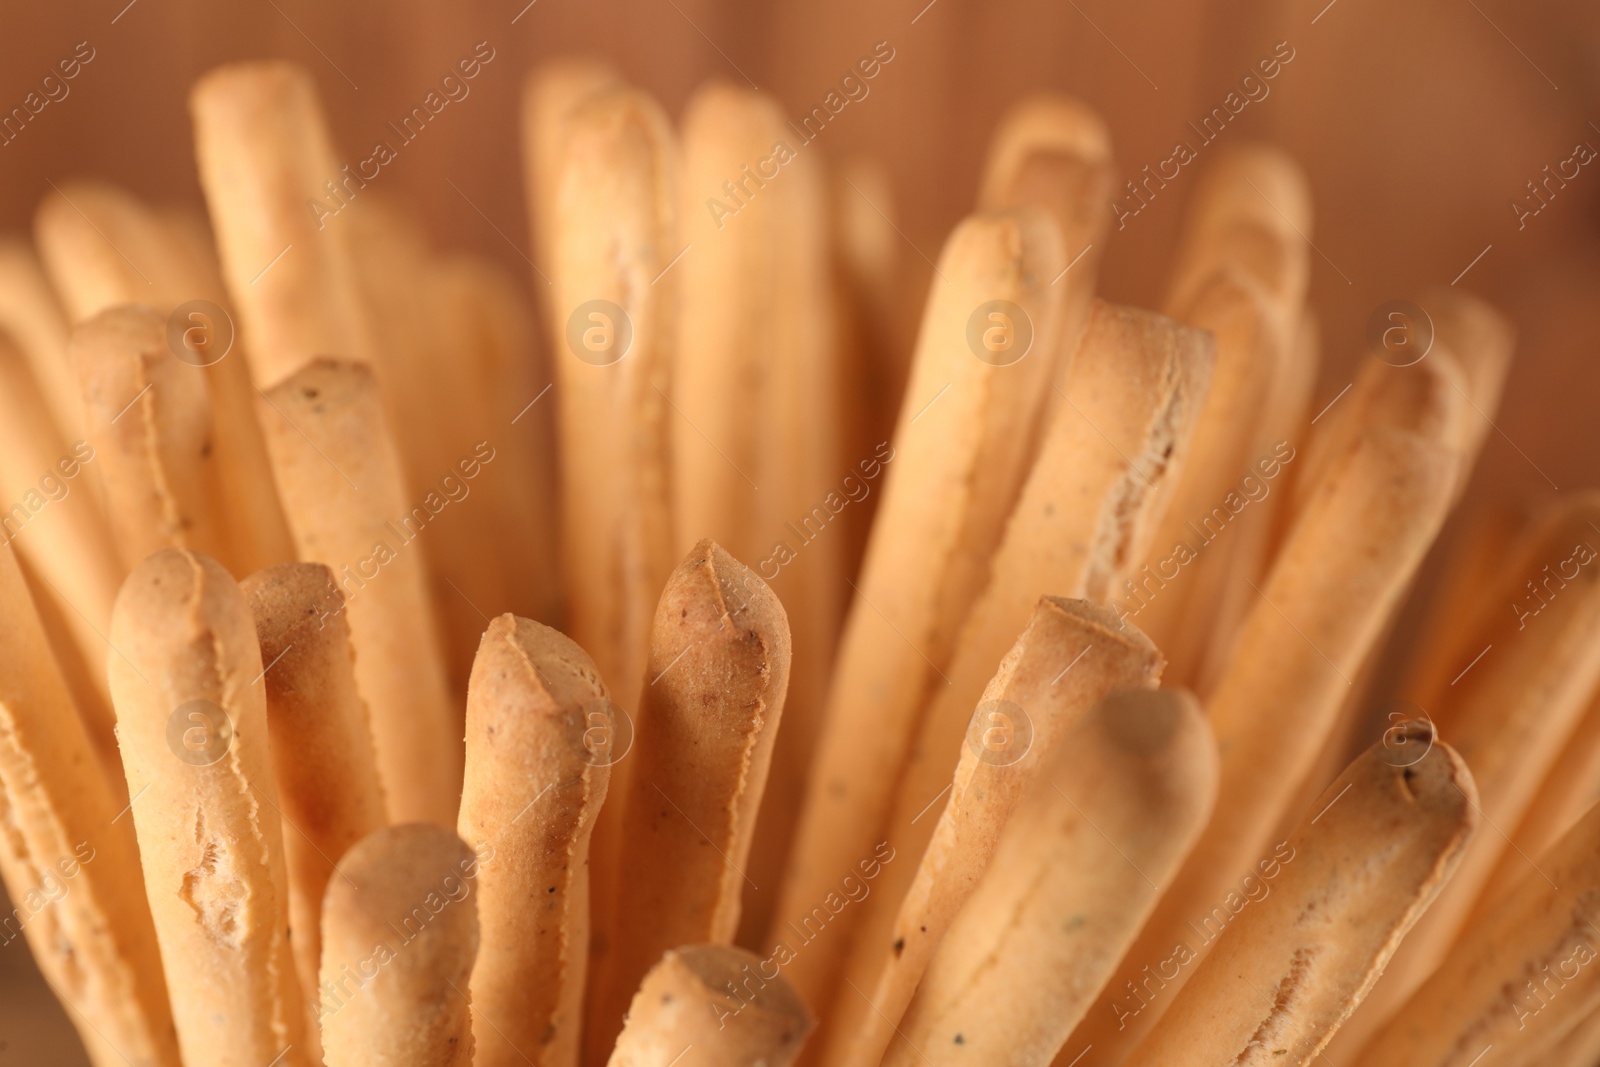 Photo of Many fresh delicious grissini sticks, closeup view